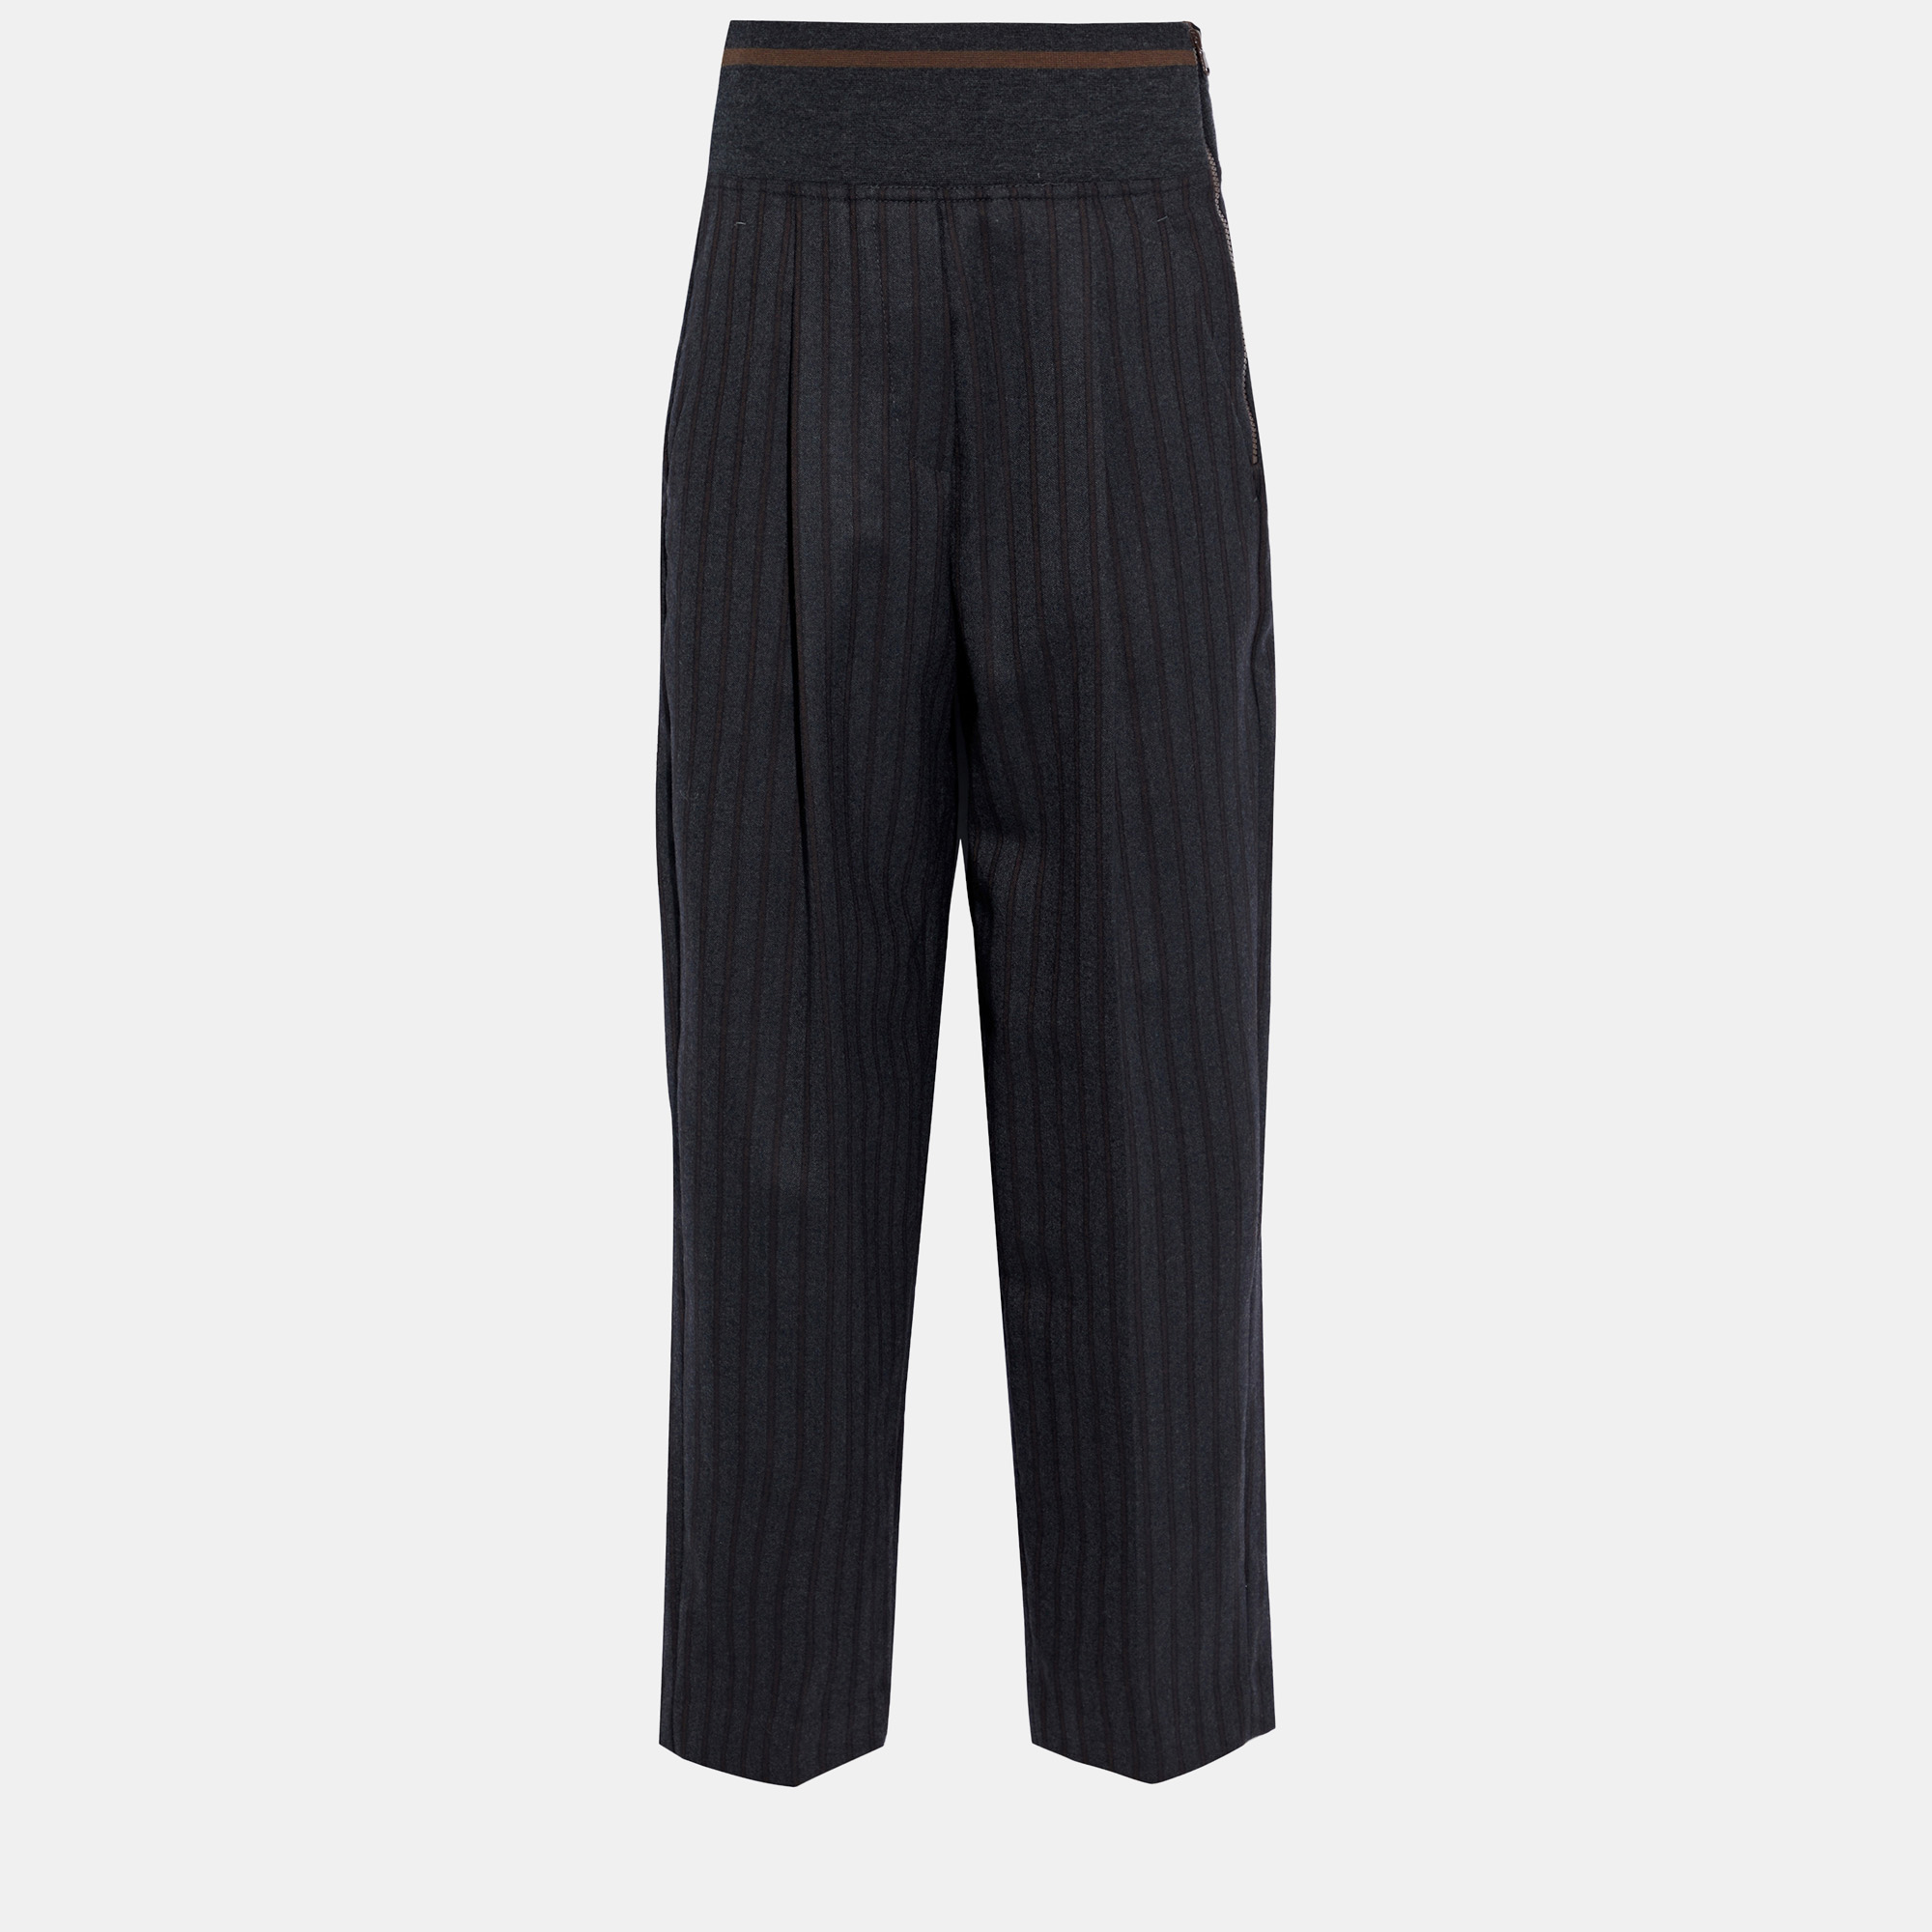 

Brunello Cucinelli Charcoal Grey Striped Wool Pants S (IT 38)